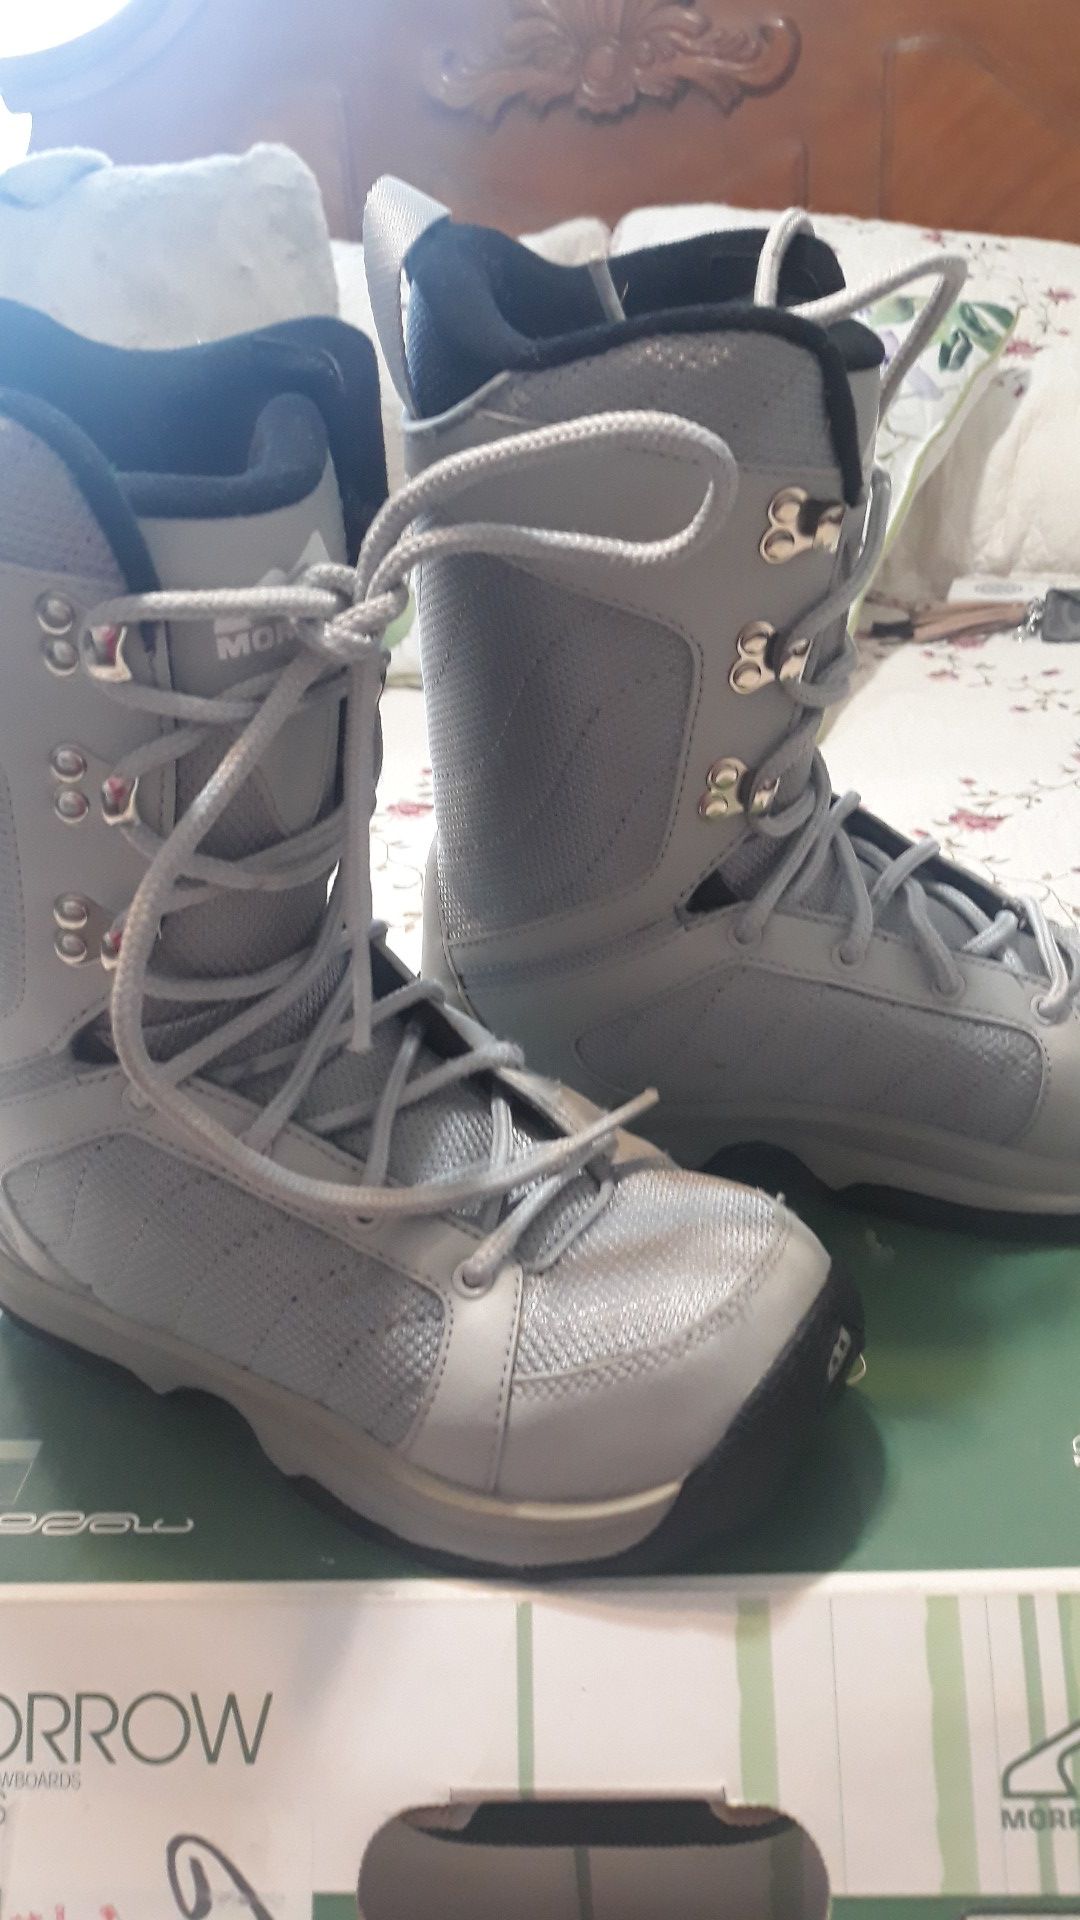 Morrow Snowboard Boots